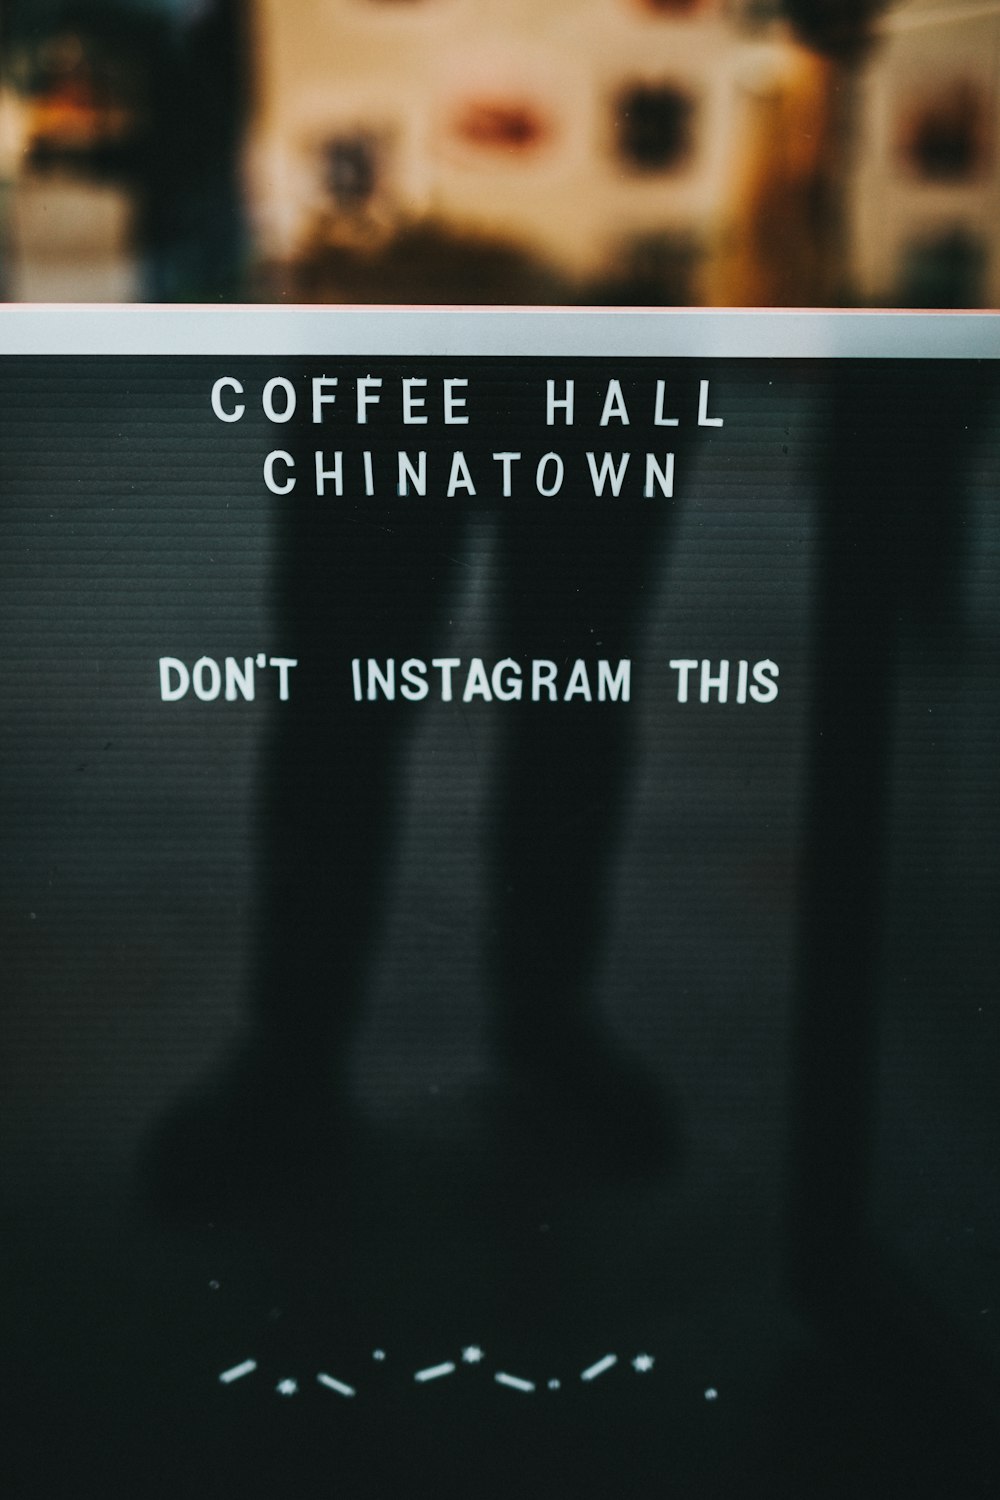 Coffee Hall Chinatown signage